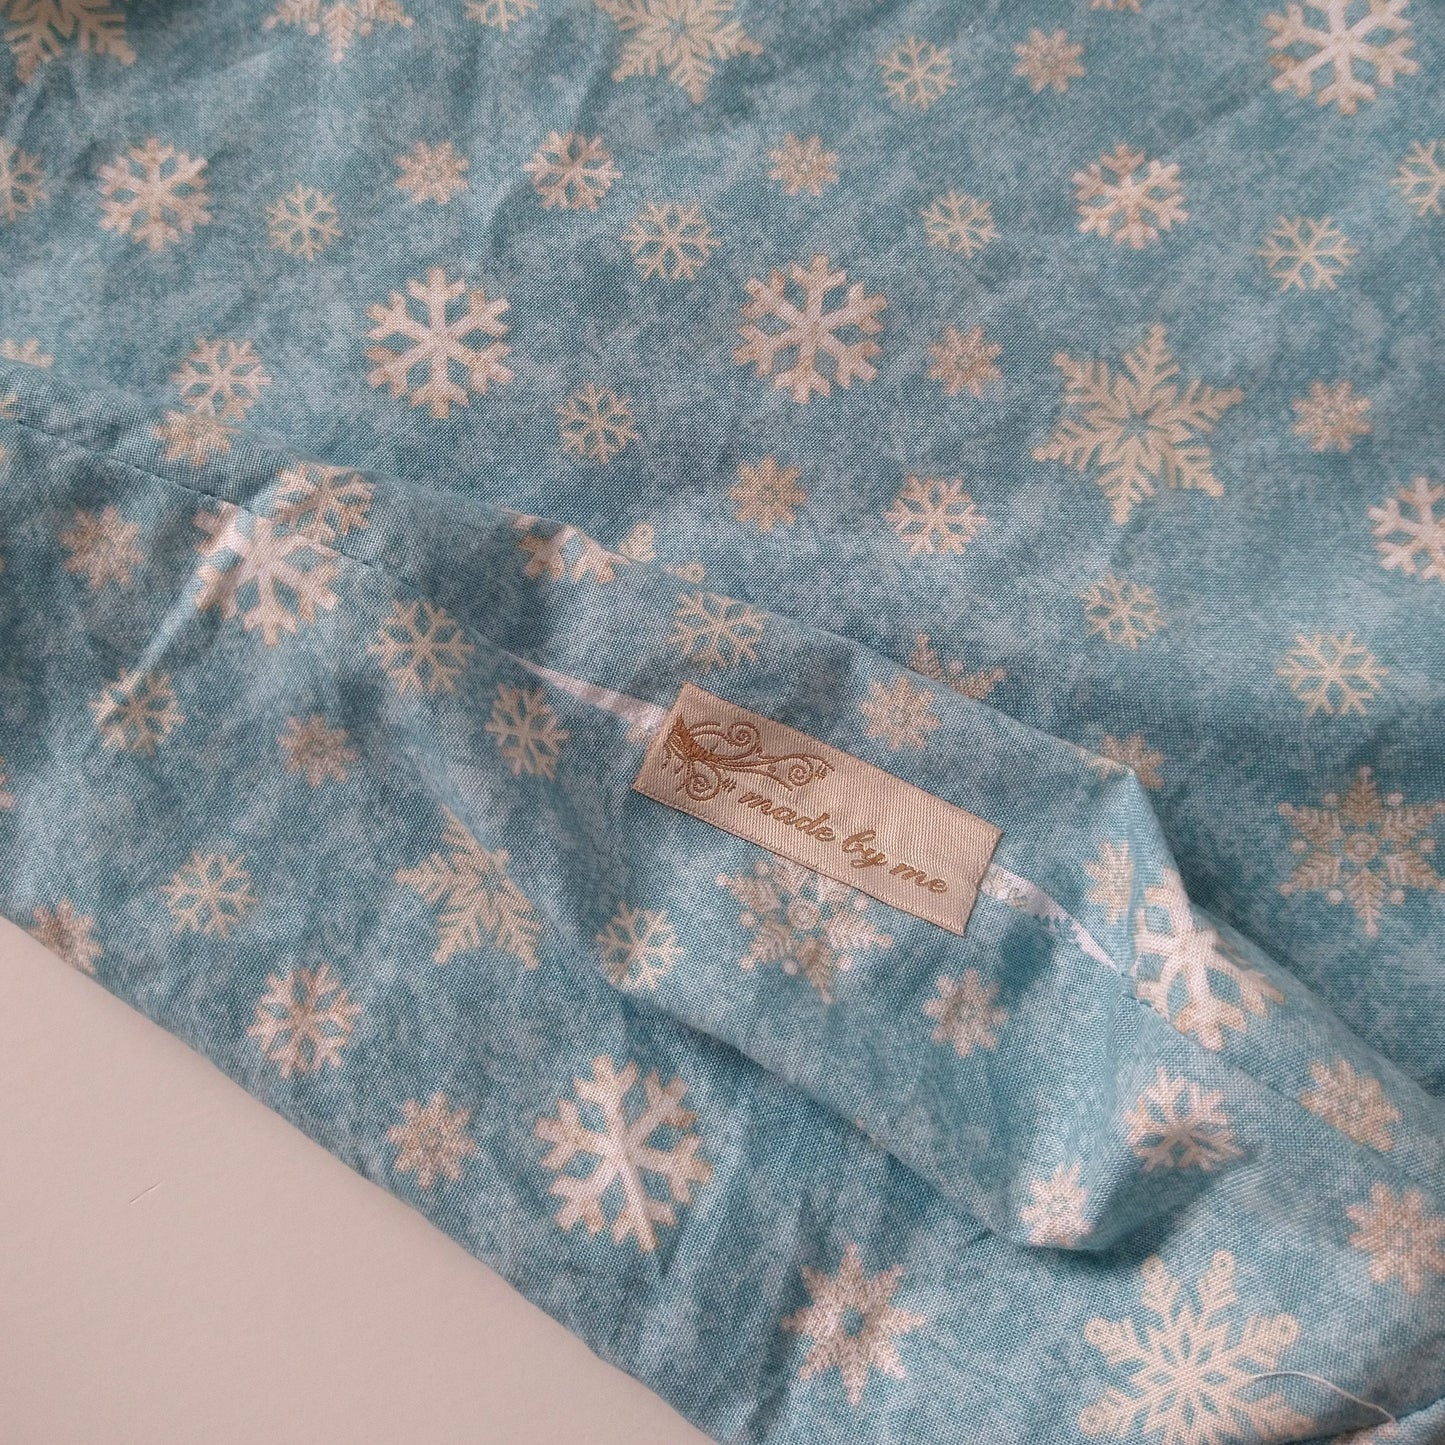 Shopping bag, reversible, size medium, Winter snowflakes (Handmade in Canada)